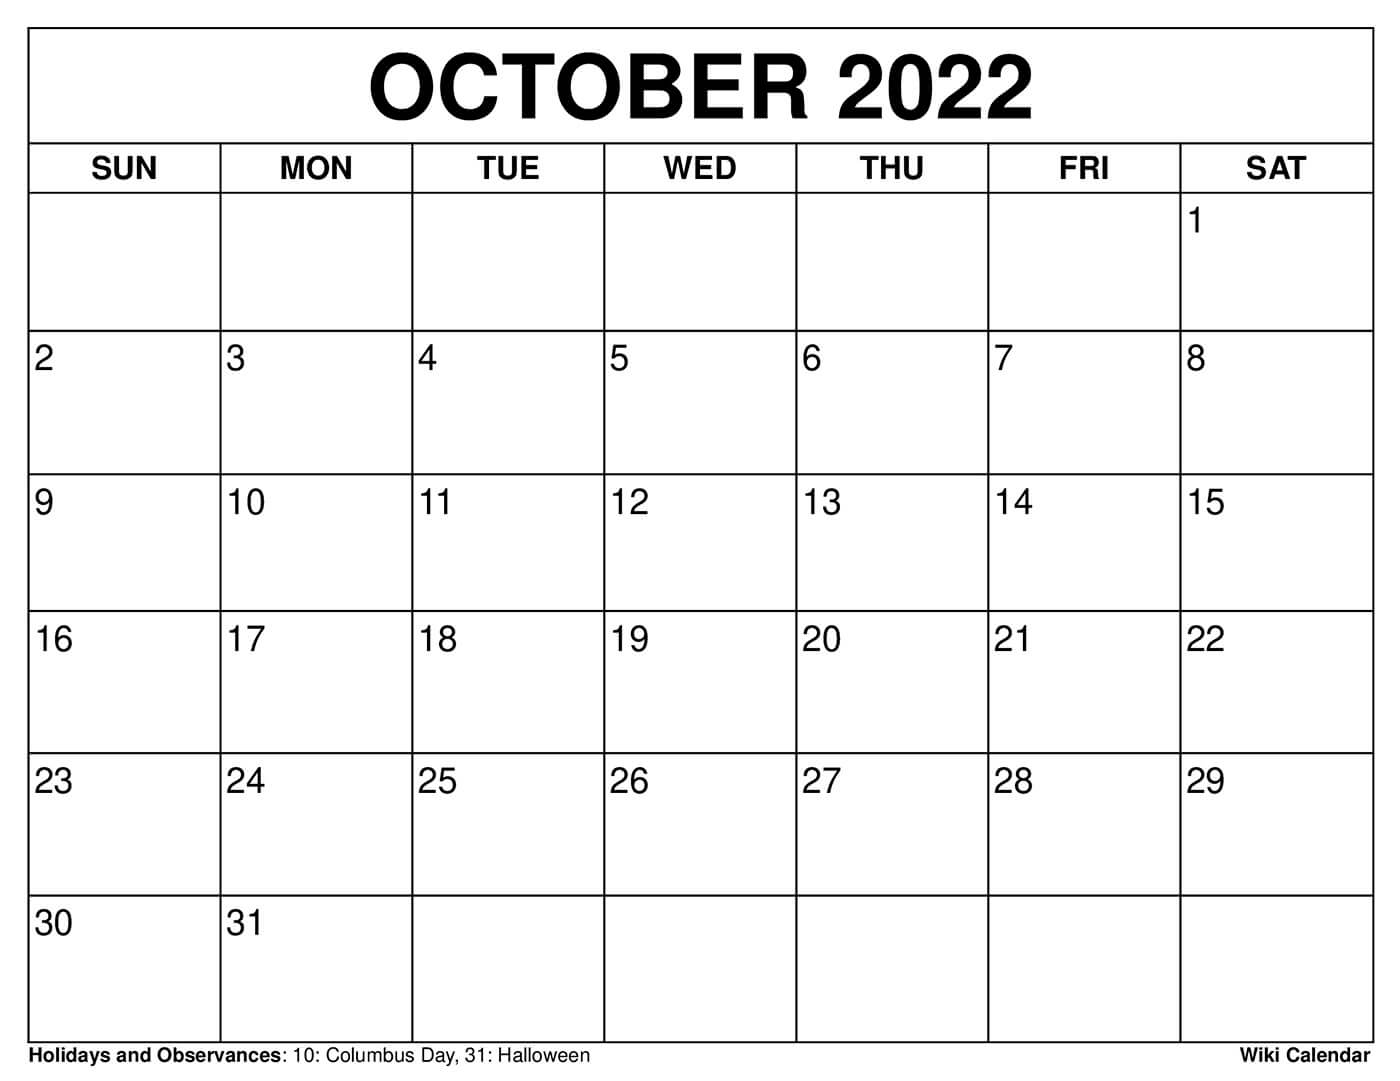 October Calendar For 2022 Free Printable October 2022 Calendars - Wiki Calendar